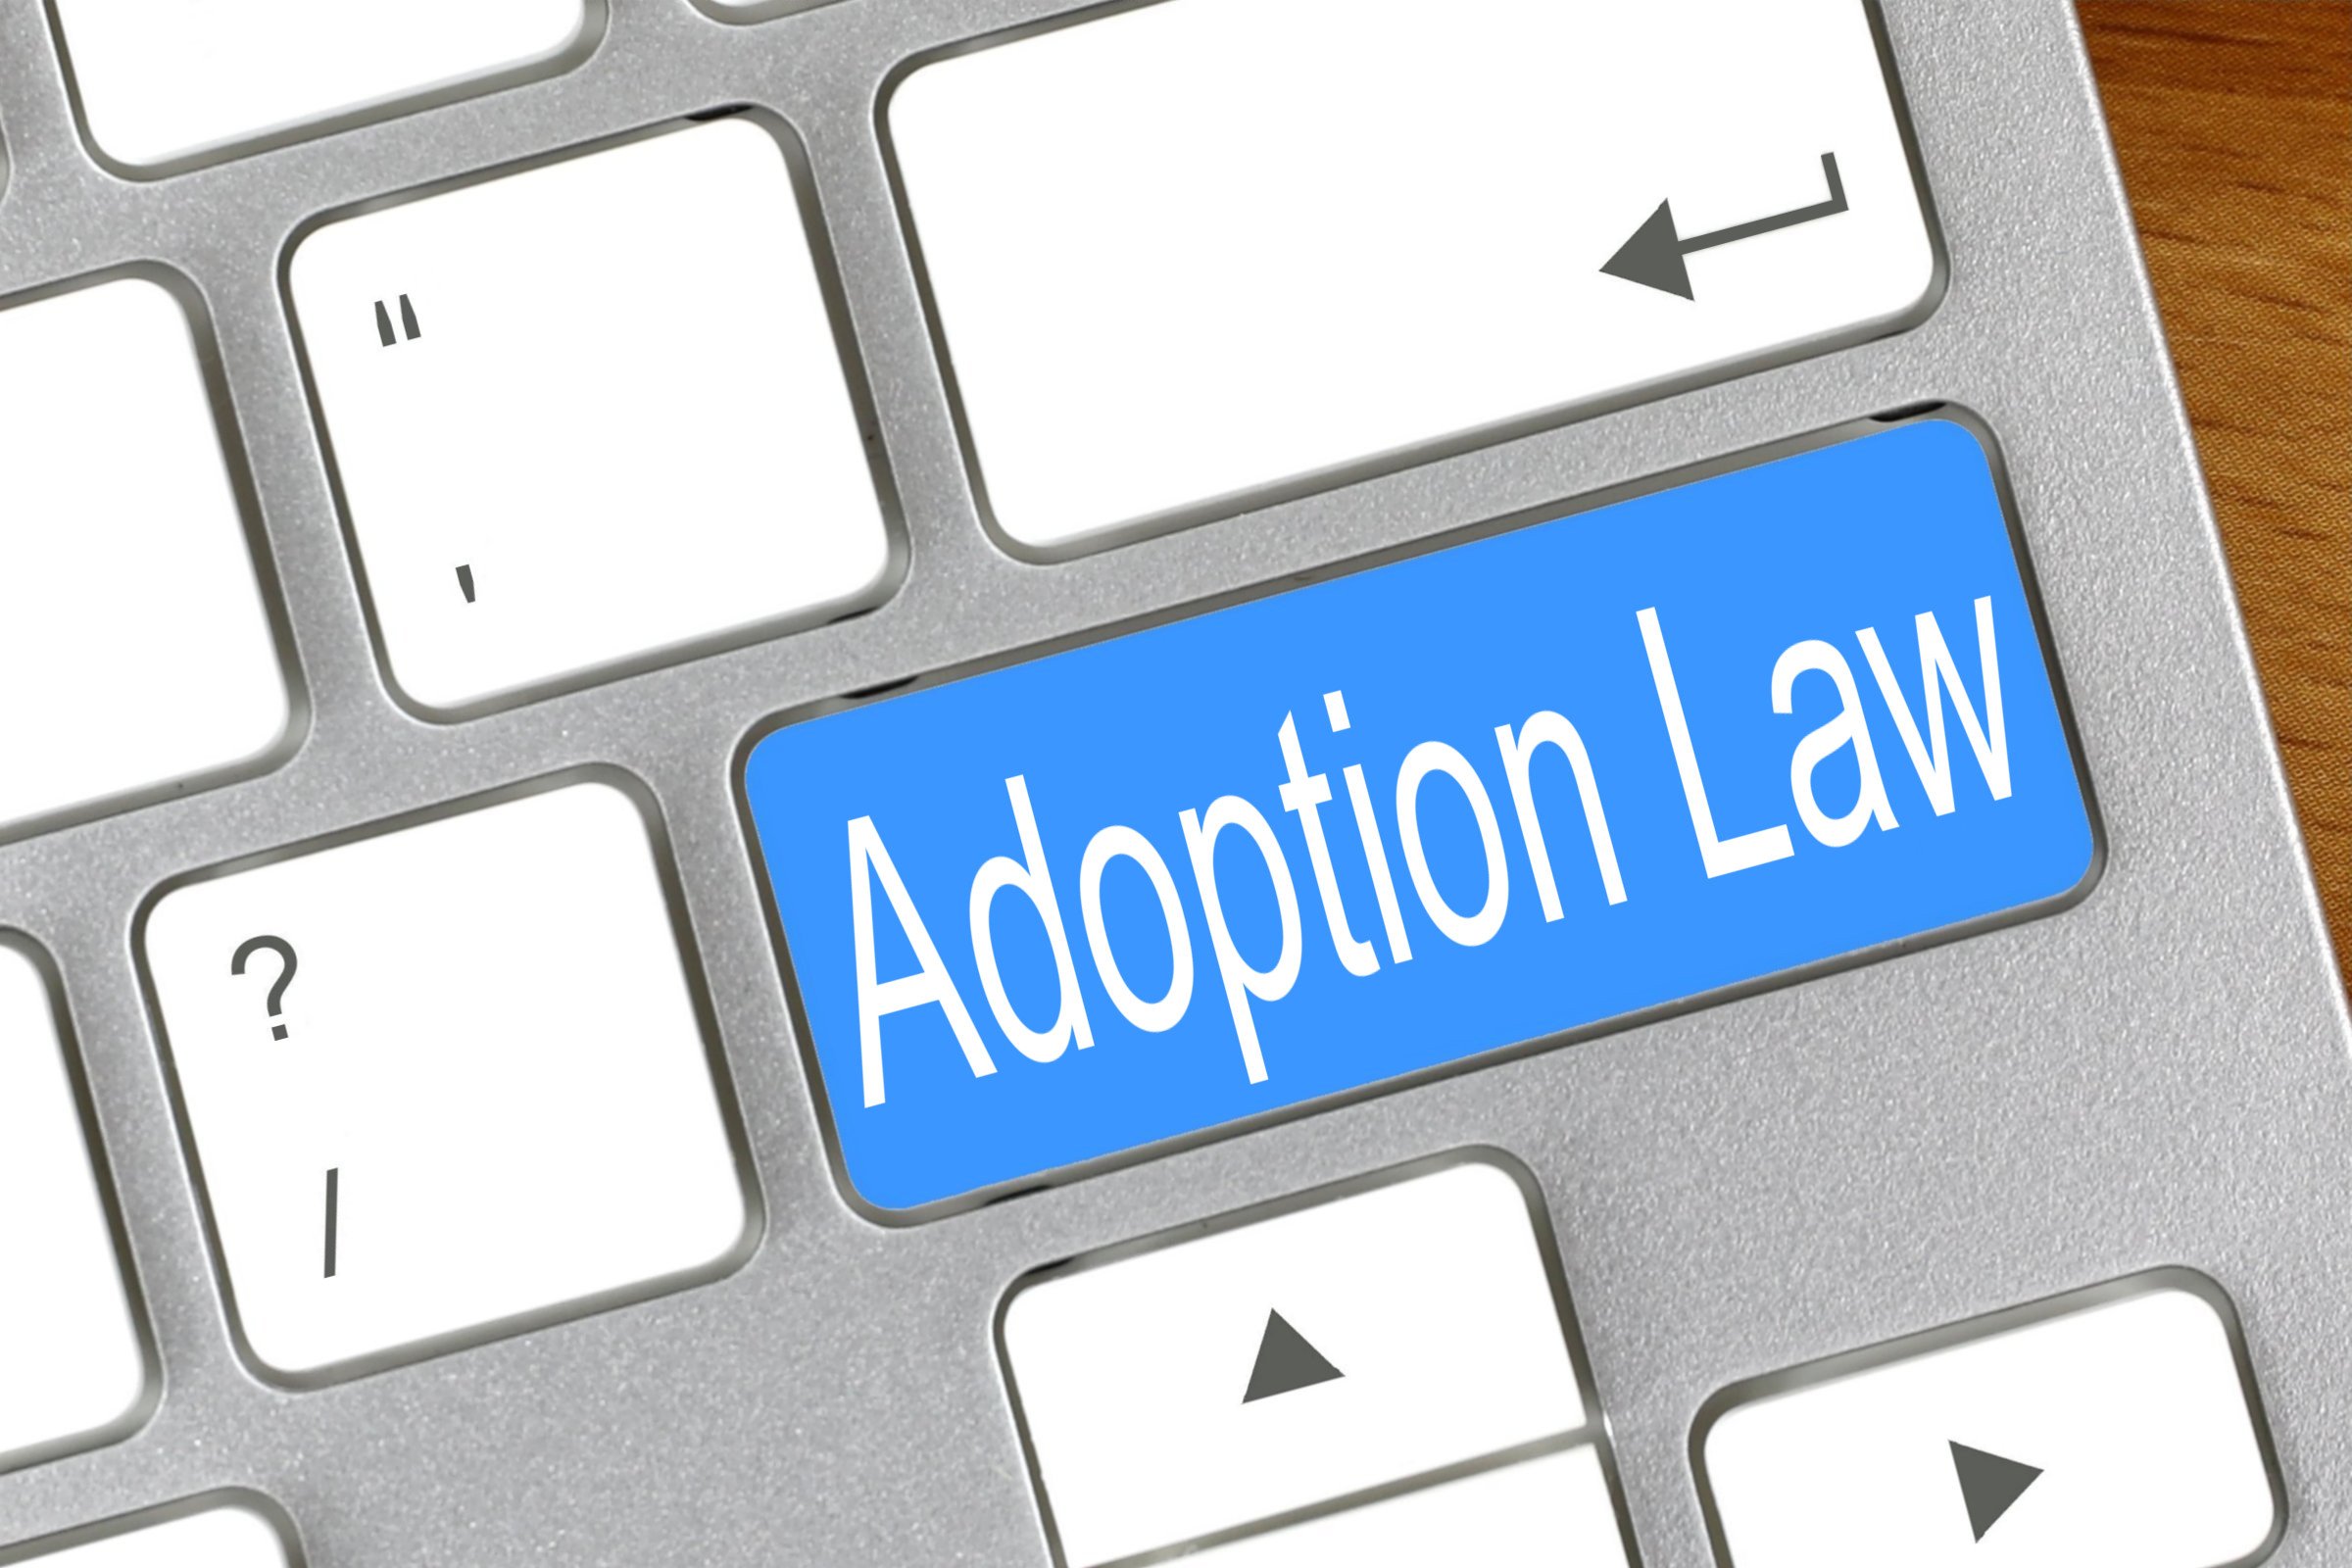 adoption law